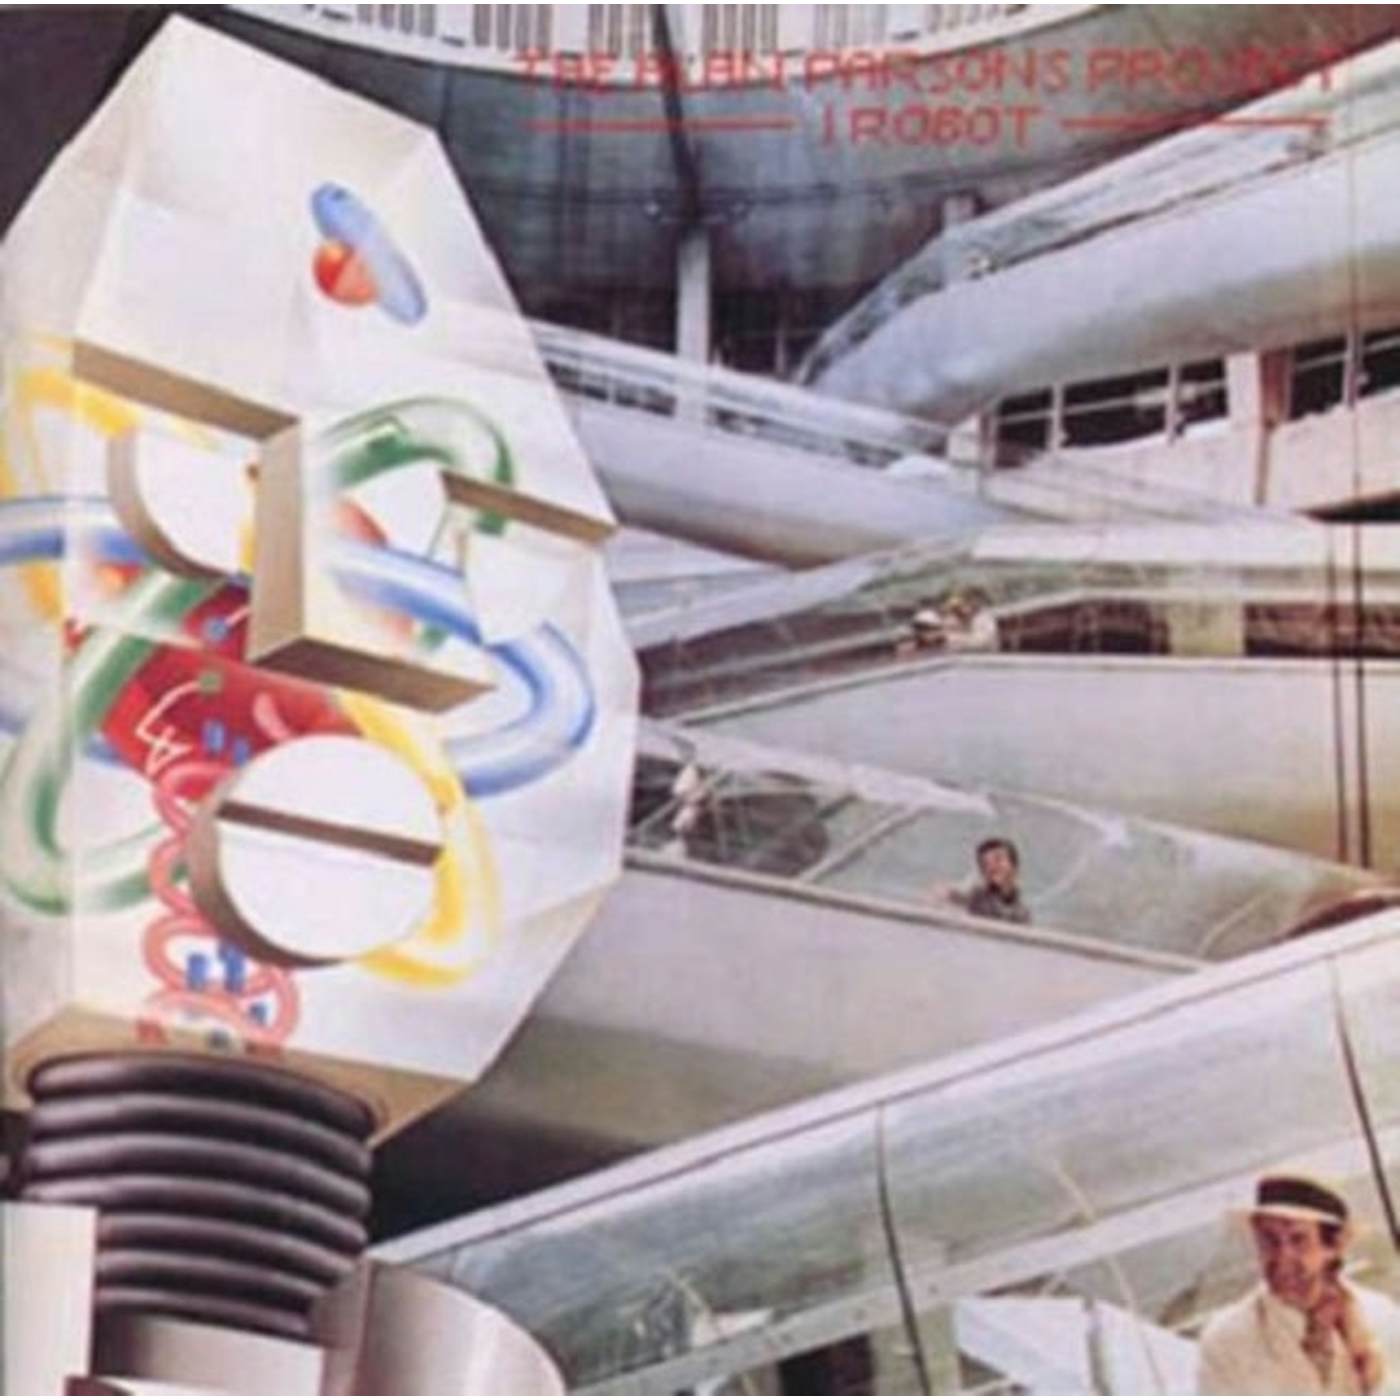 The Alan Parsons Project LP Vinyl Record - I Robot